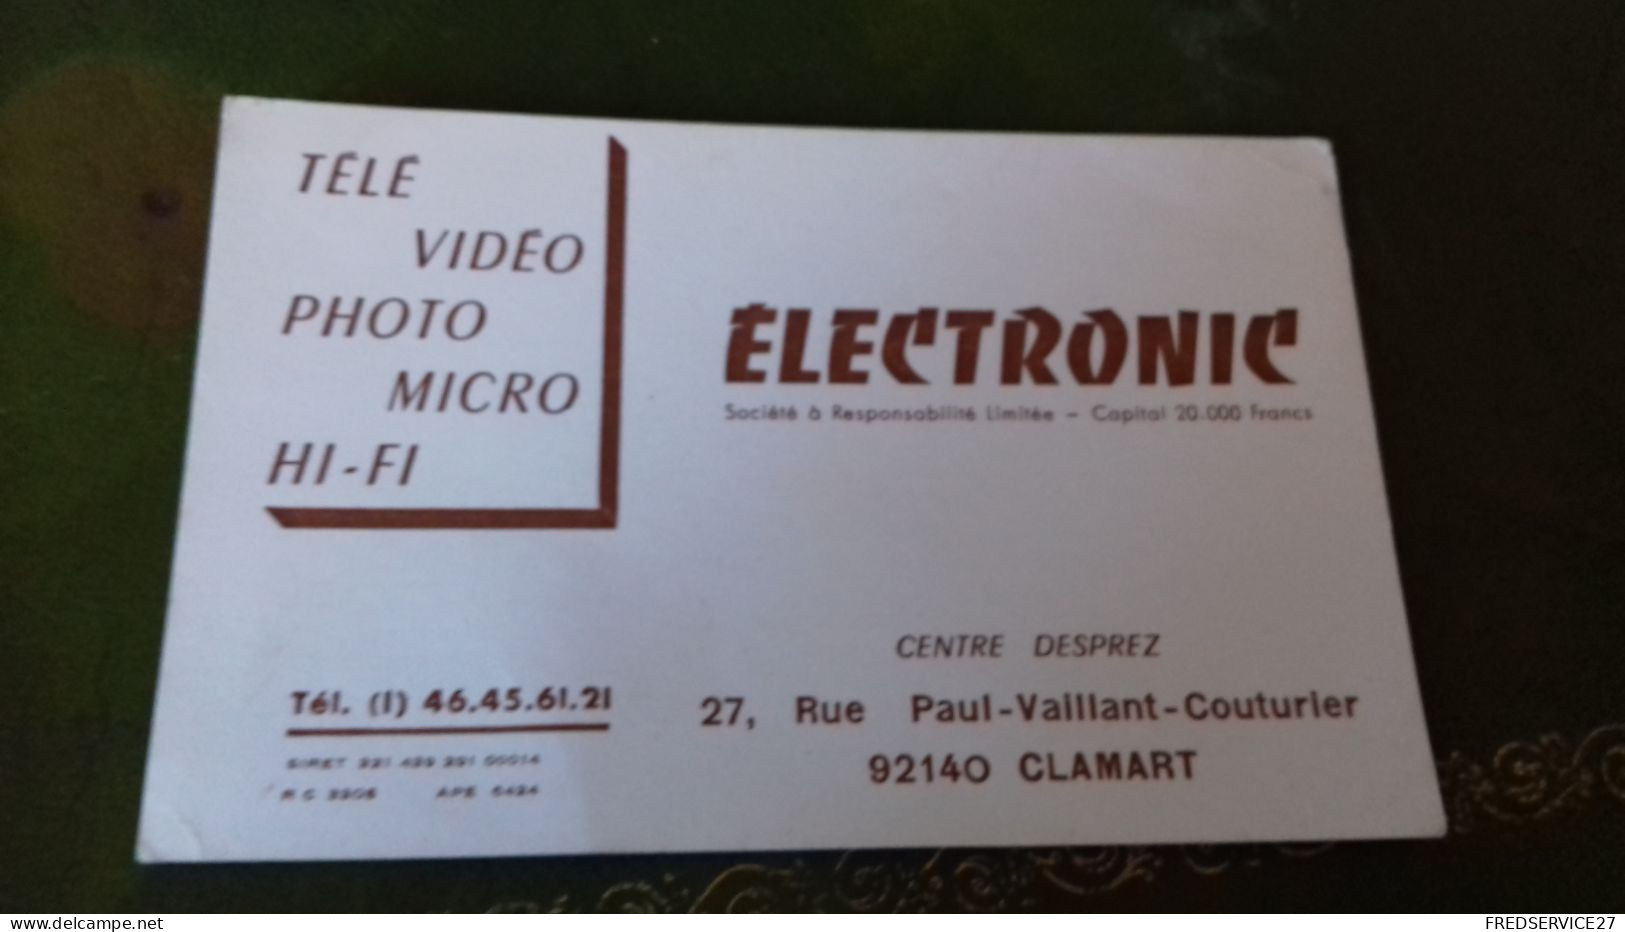 236/ CARTE DE VISITE ELECTRONIC CENTRE DESPRET CLAMART 92140 - Tarjetas De Visita